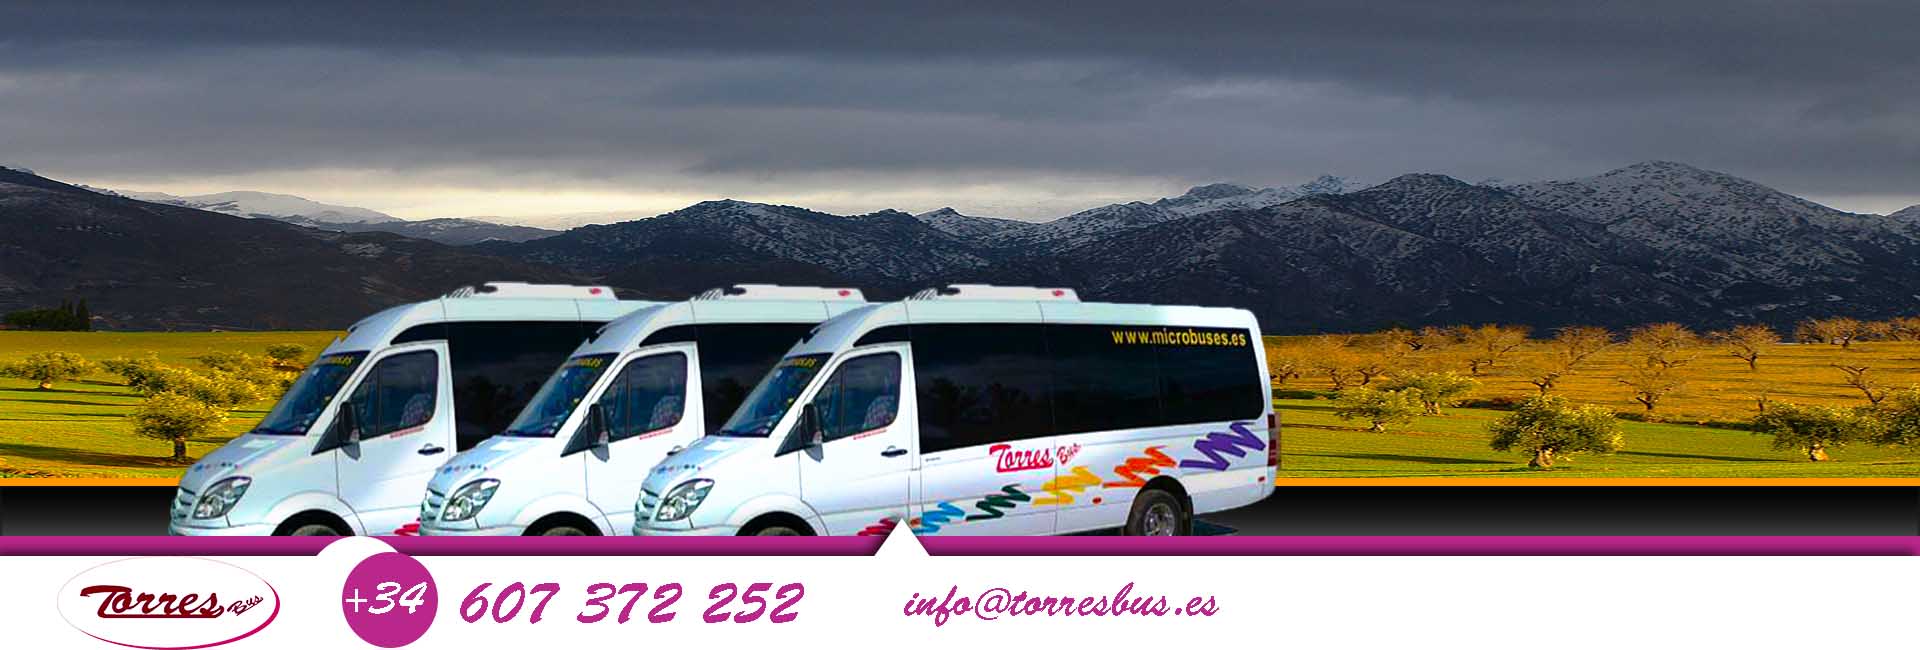 Alquiler de minibus o minibuses en Madrid para boda